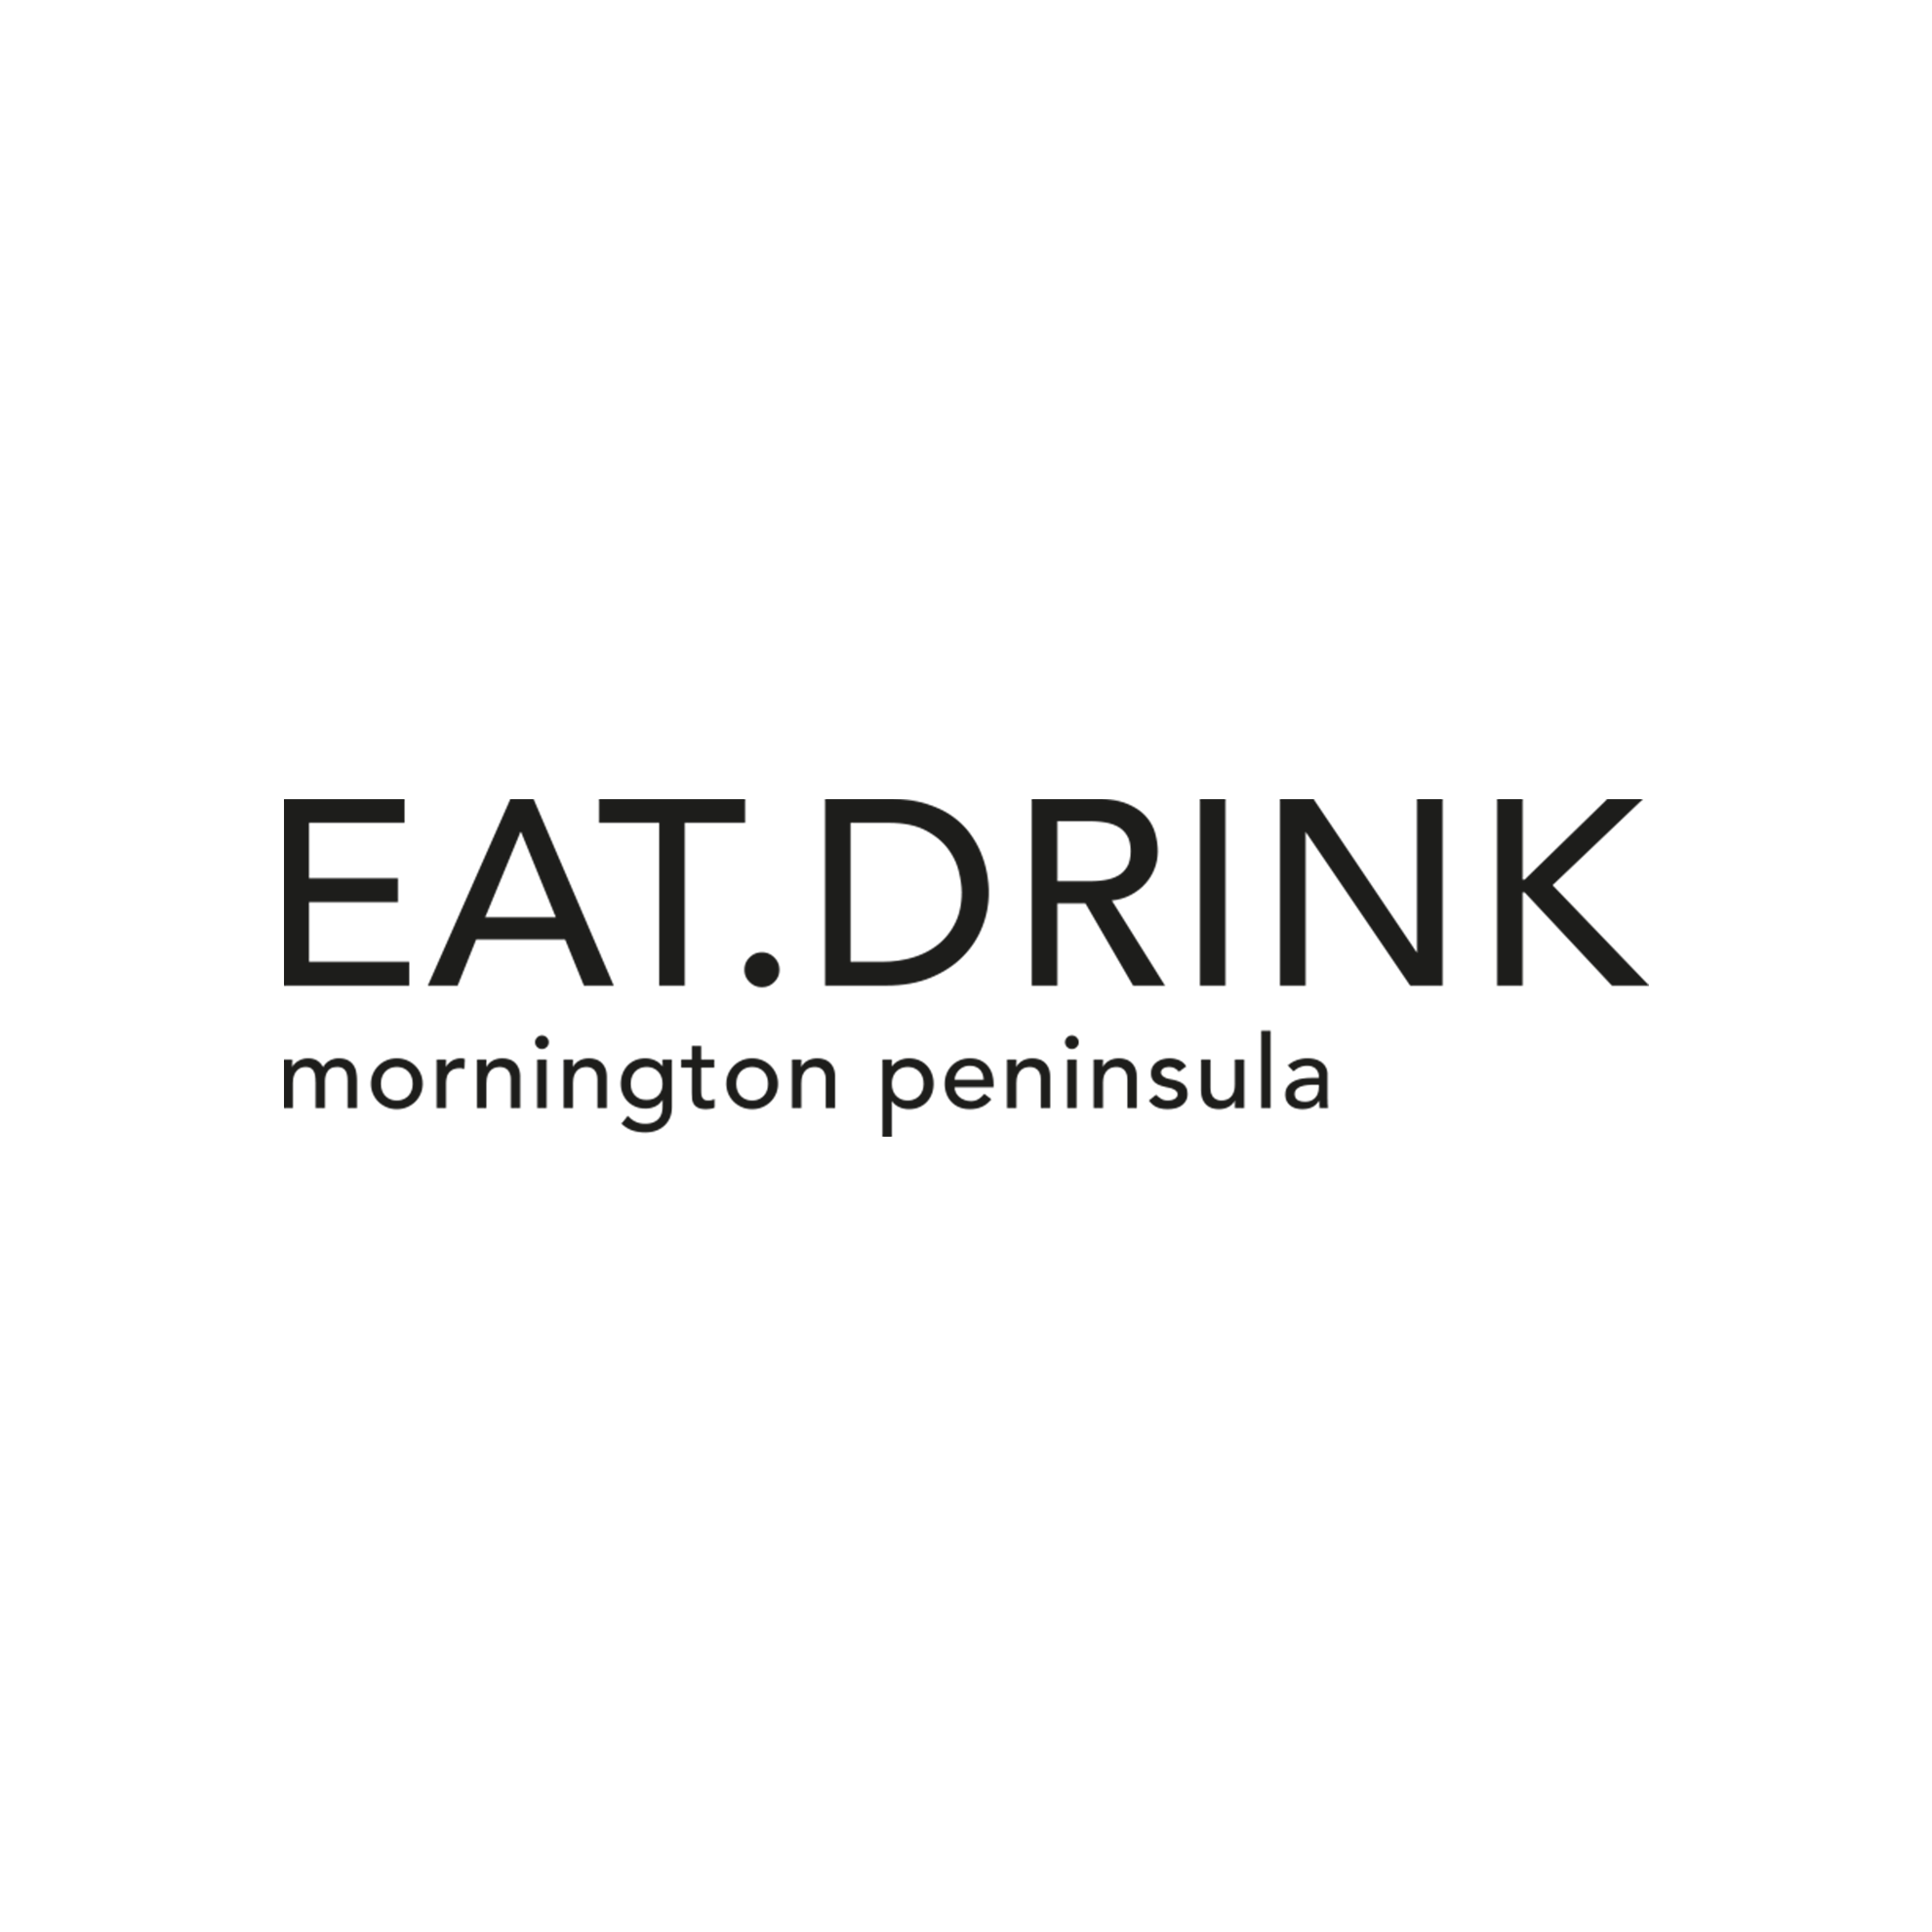 eatdrink.png